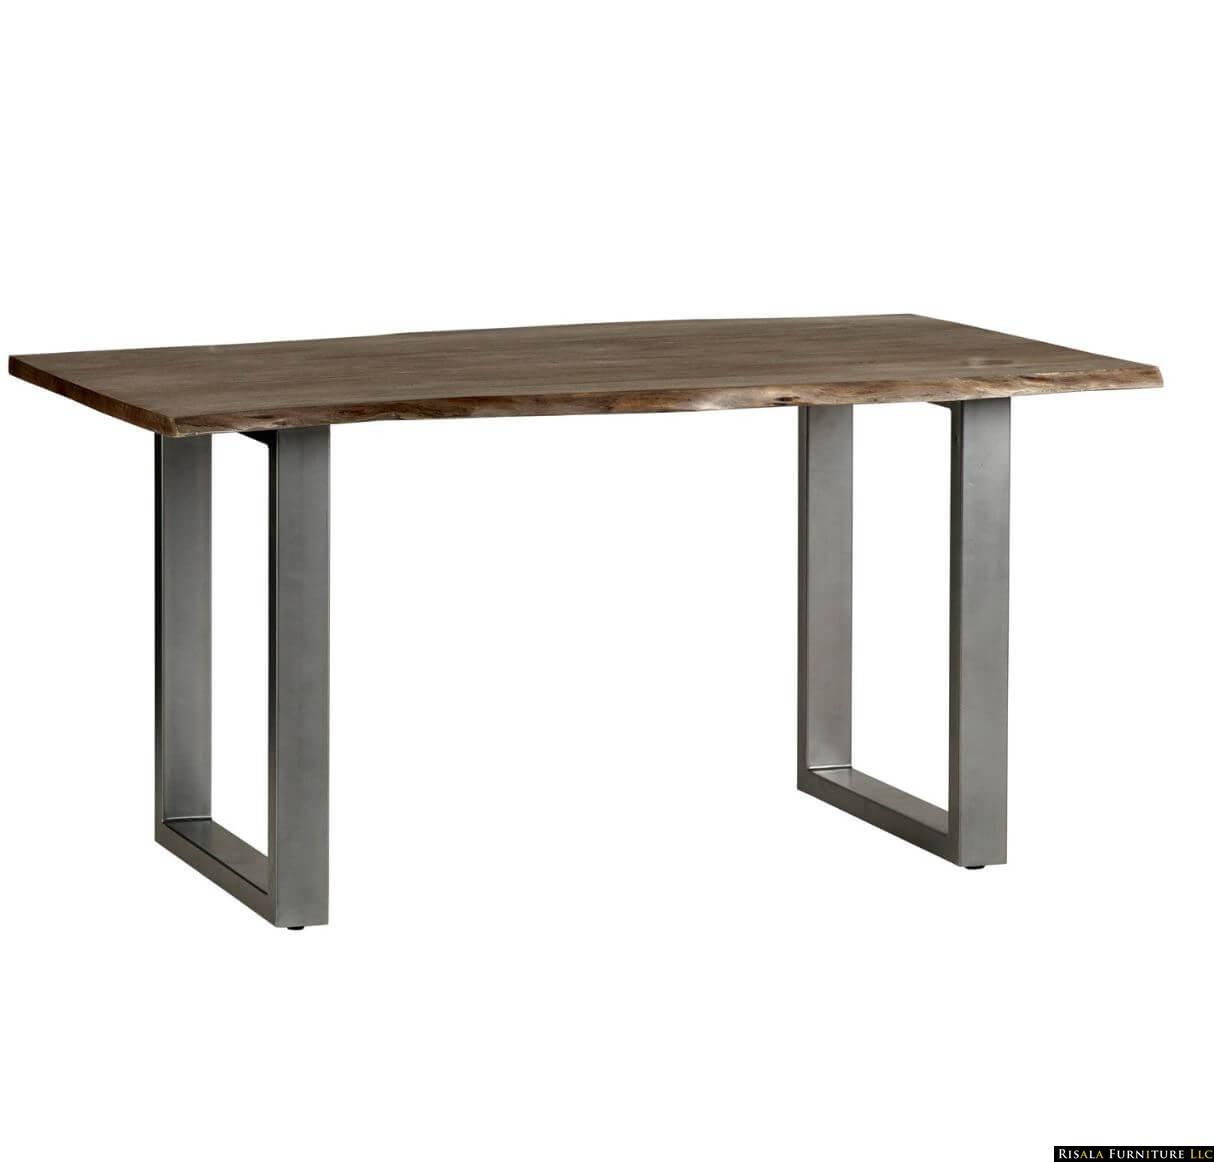 Buy best sturdy and stylish table legs, DKFON